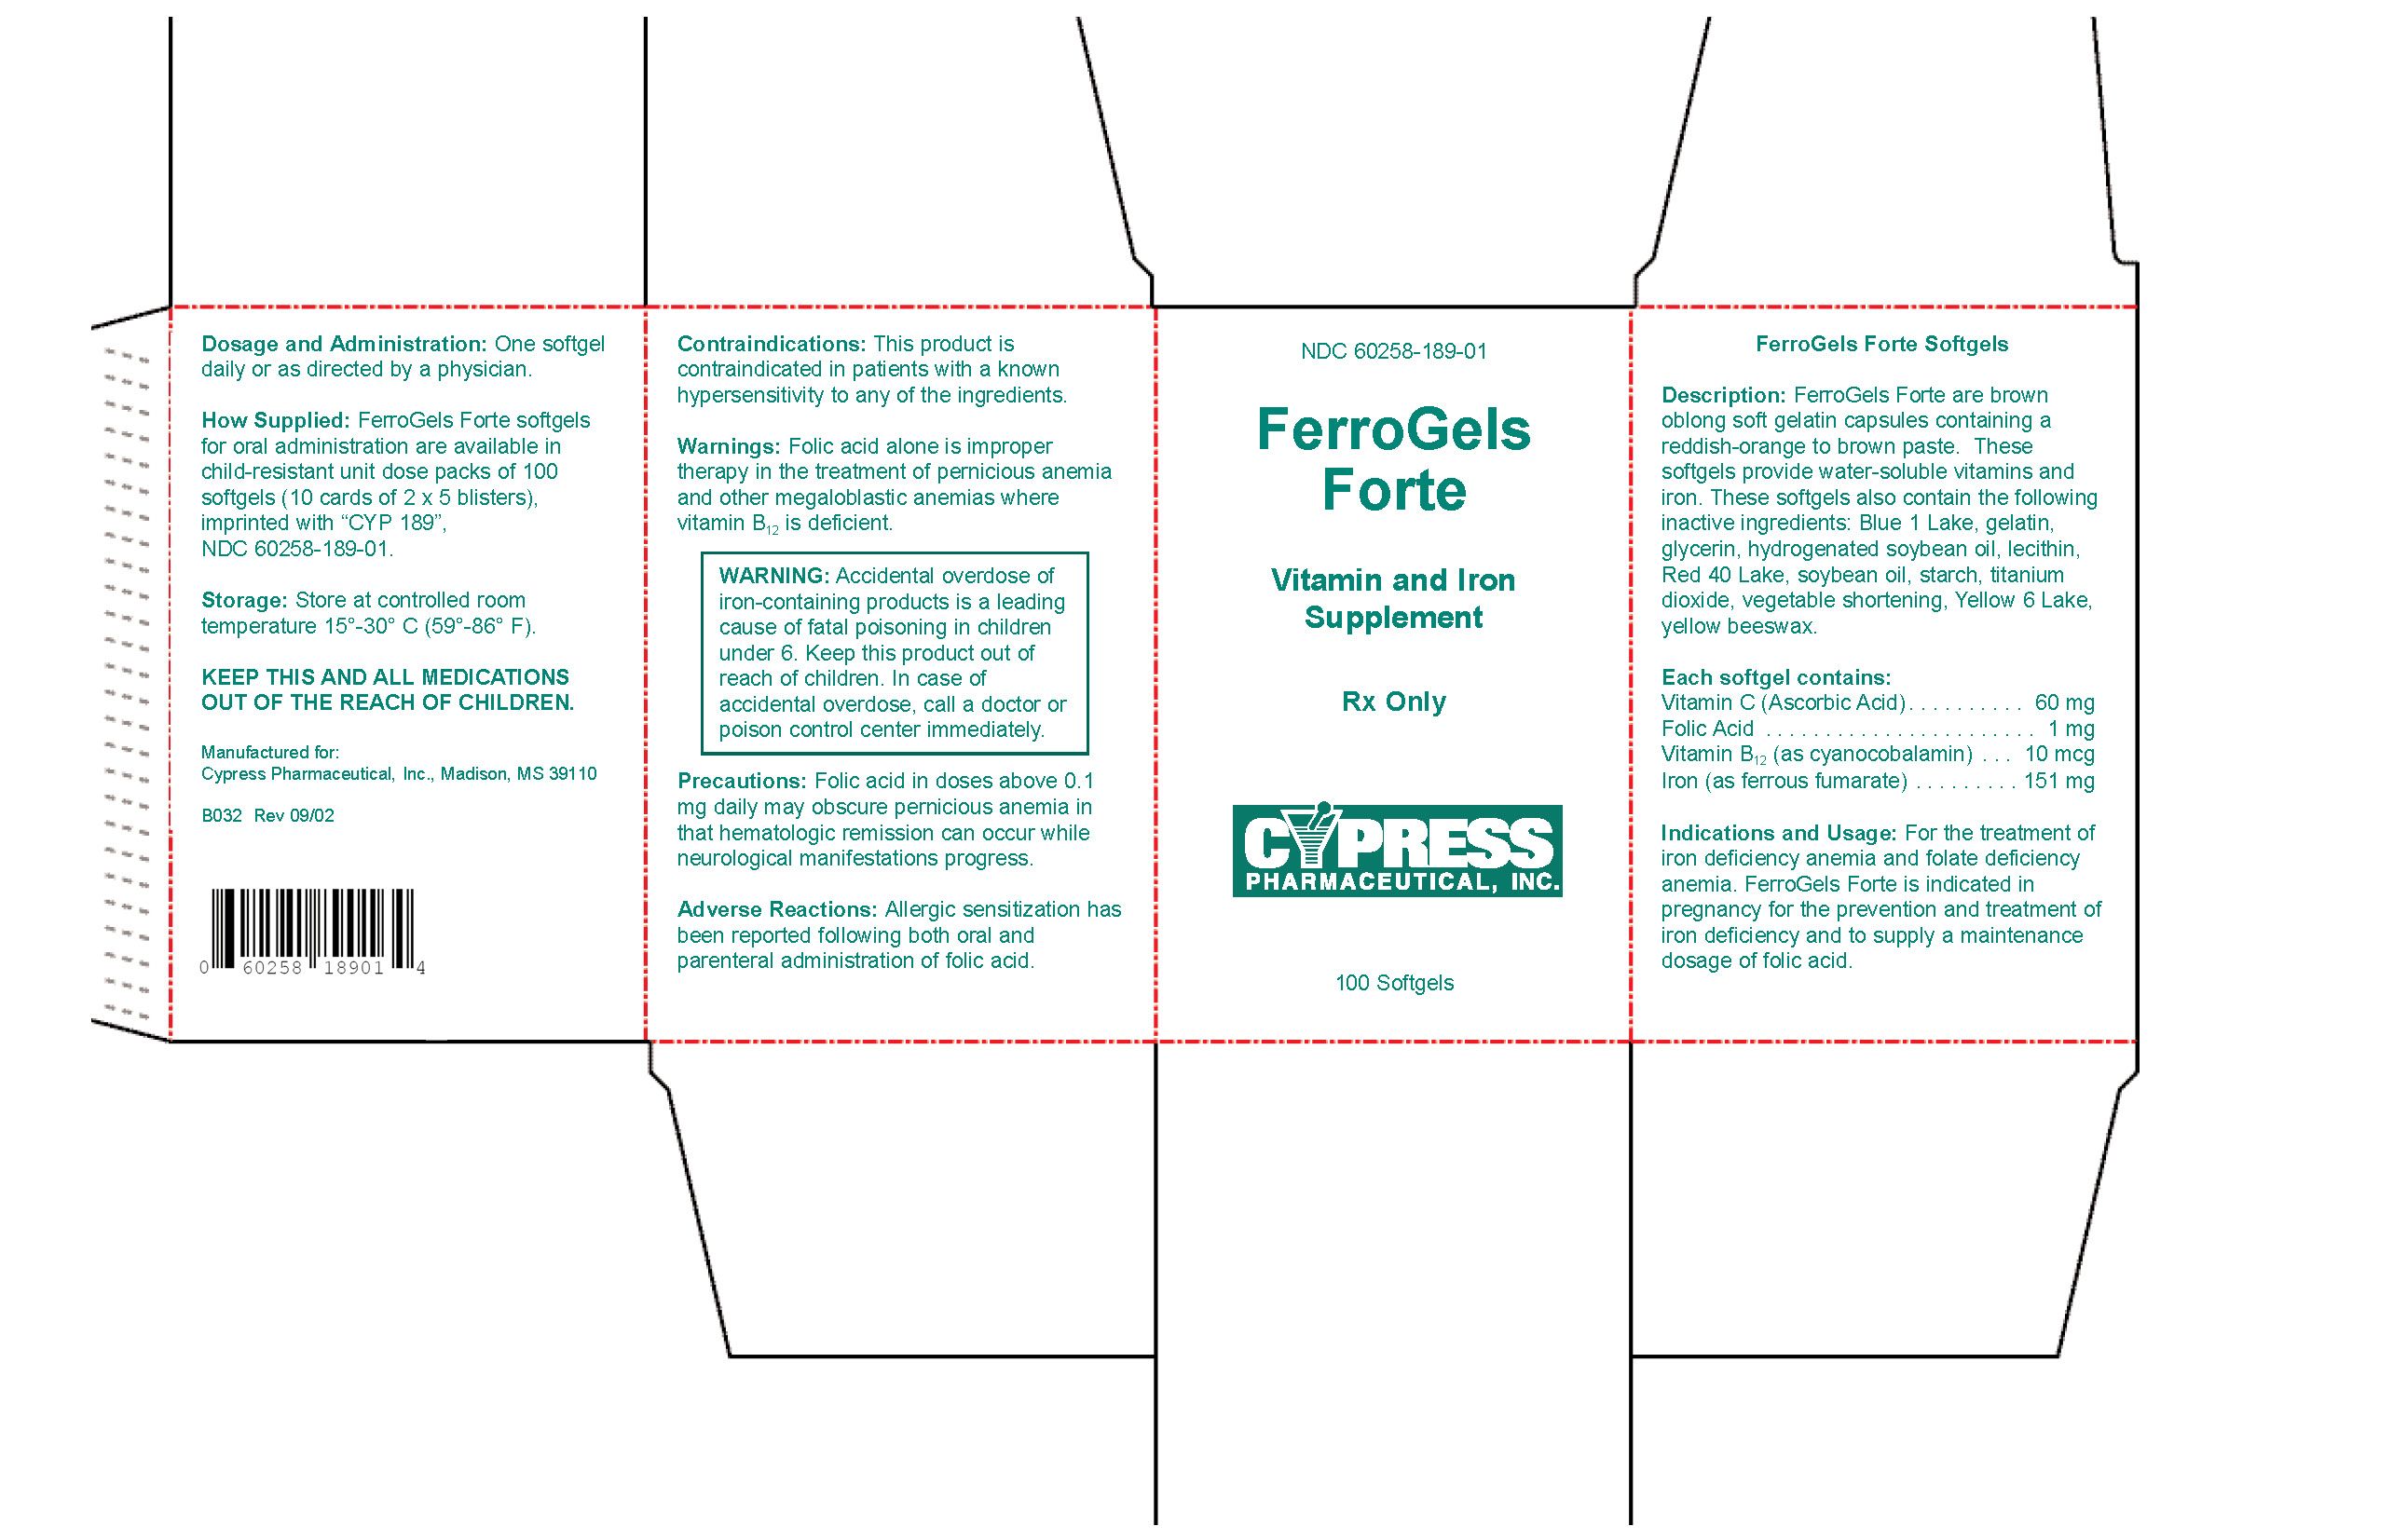 FerroGels Forte Labeling